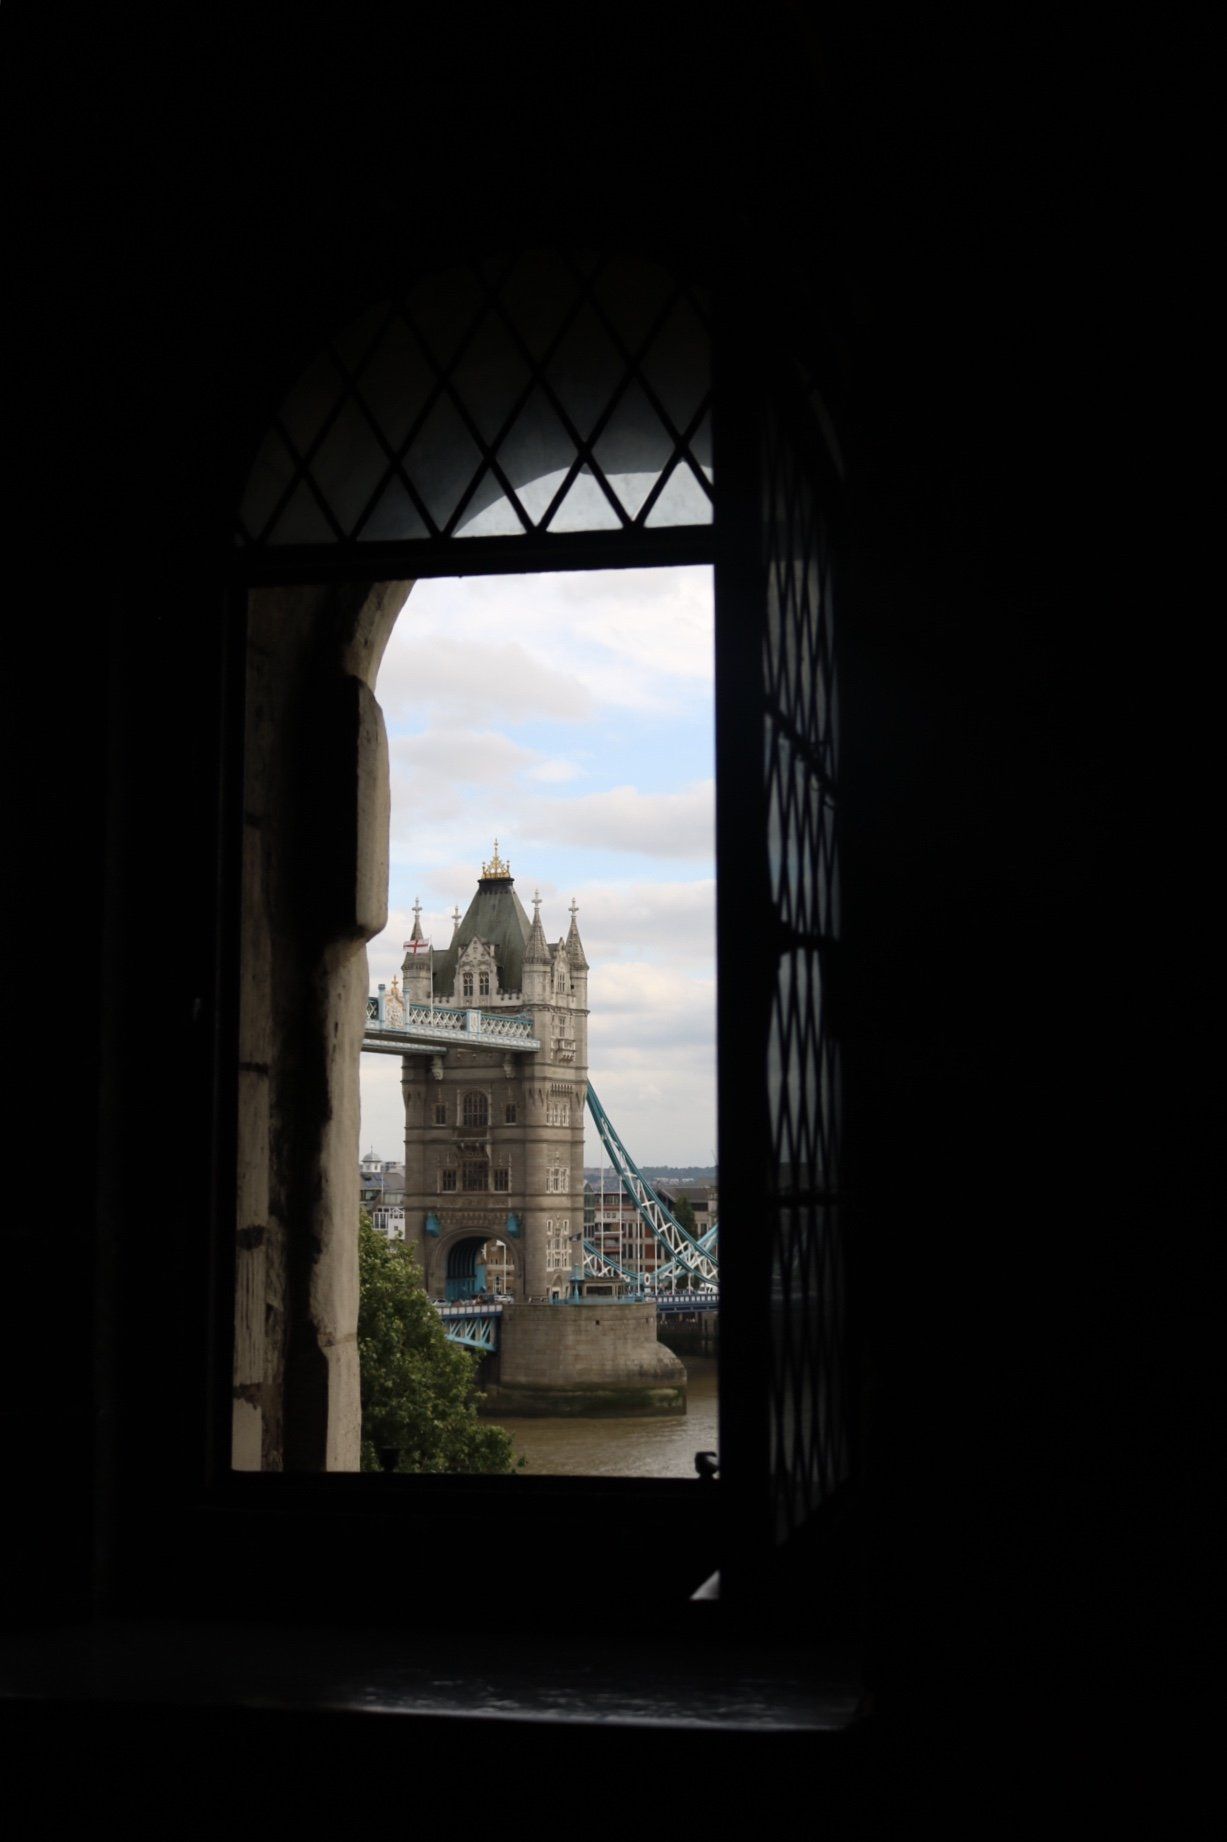 London Tower Bridge, azalia molina, fotografia, photography